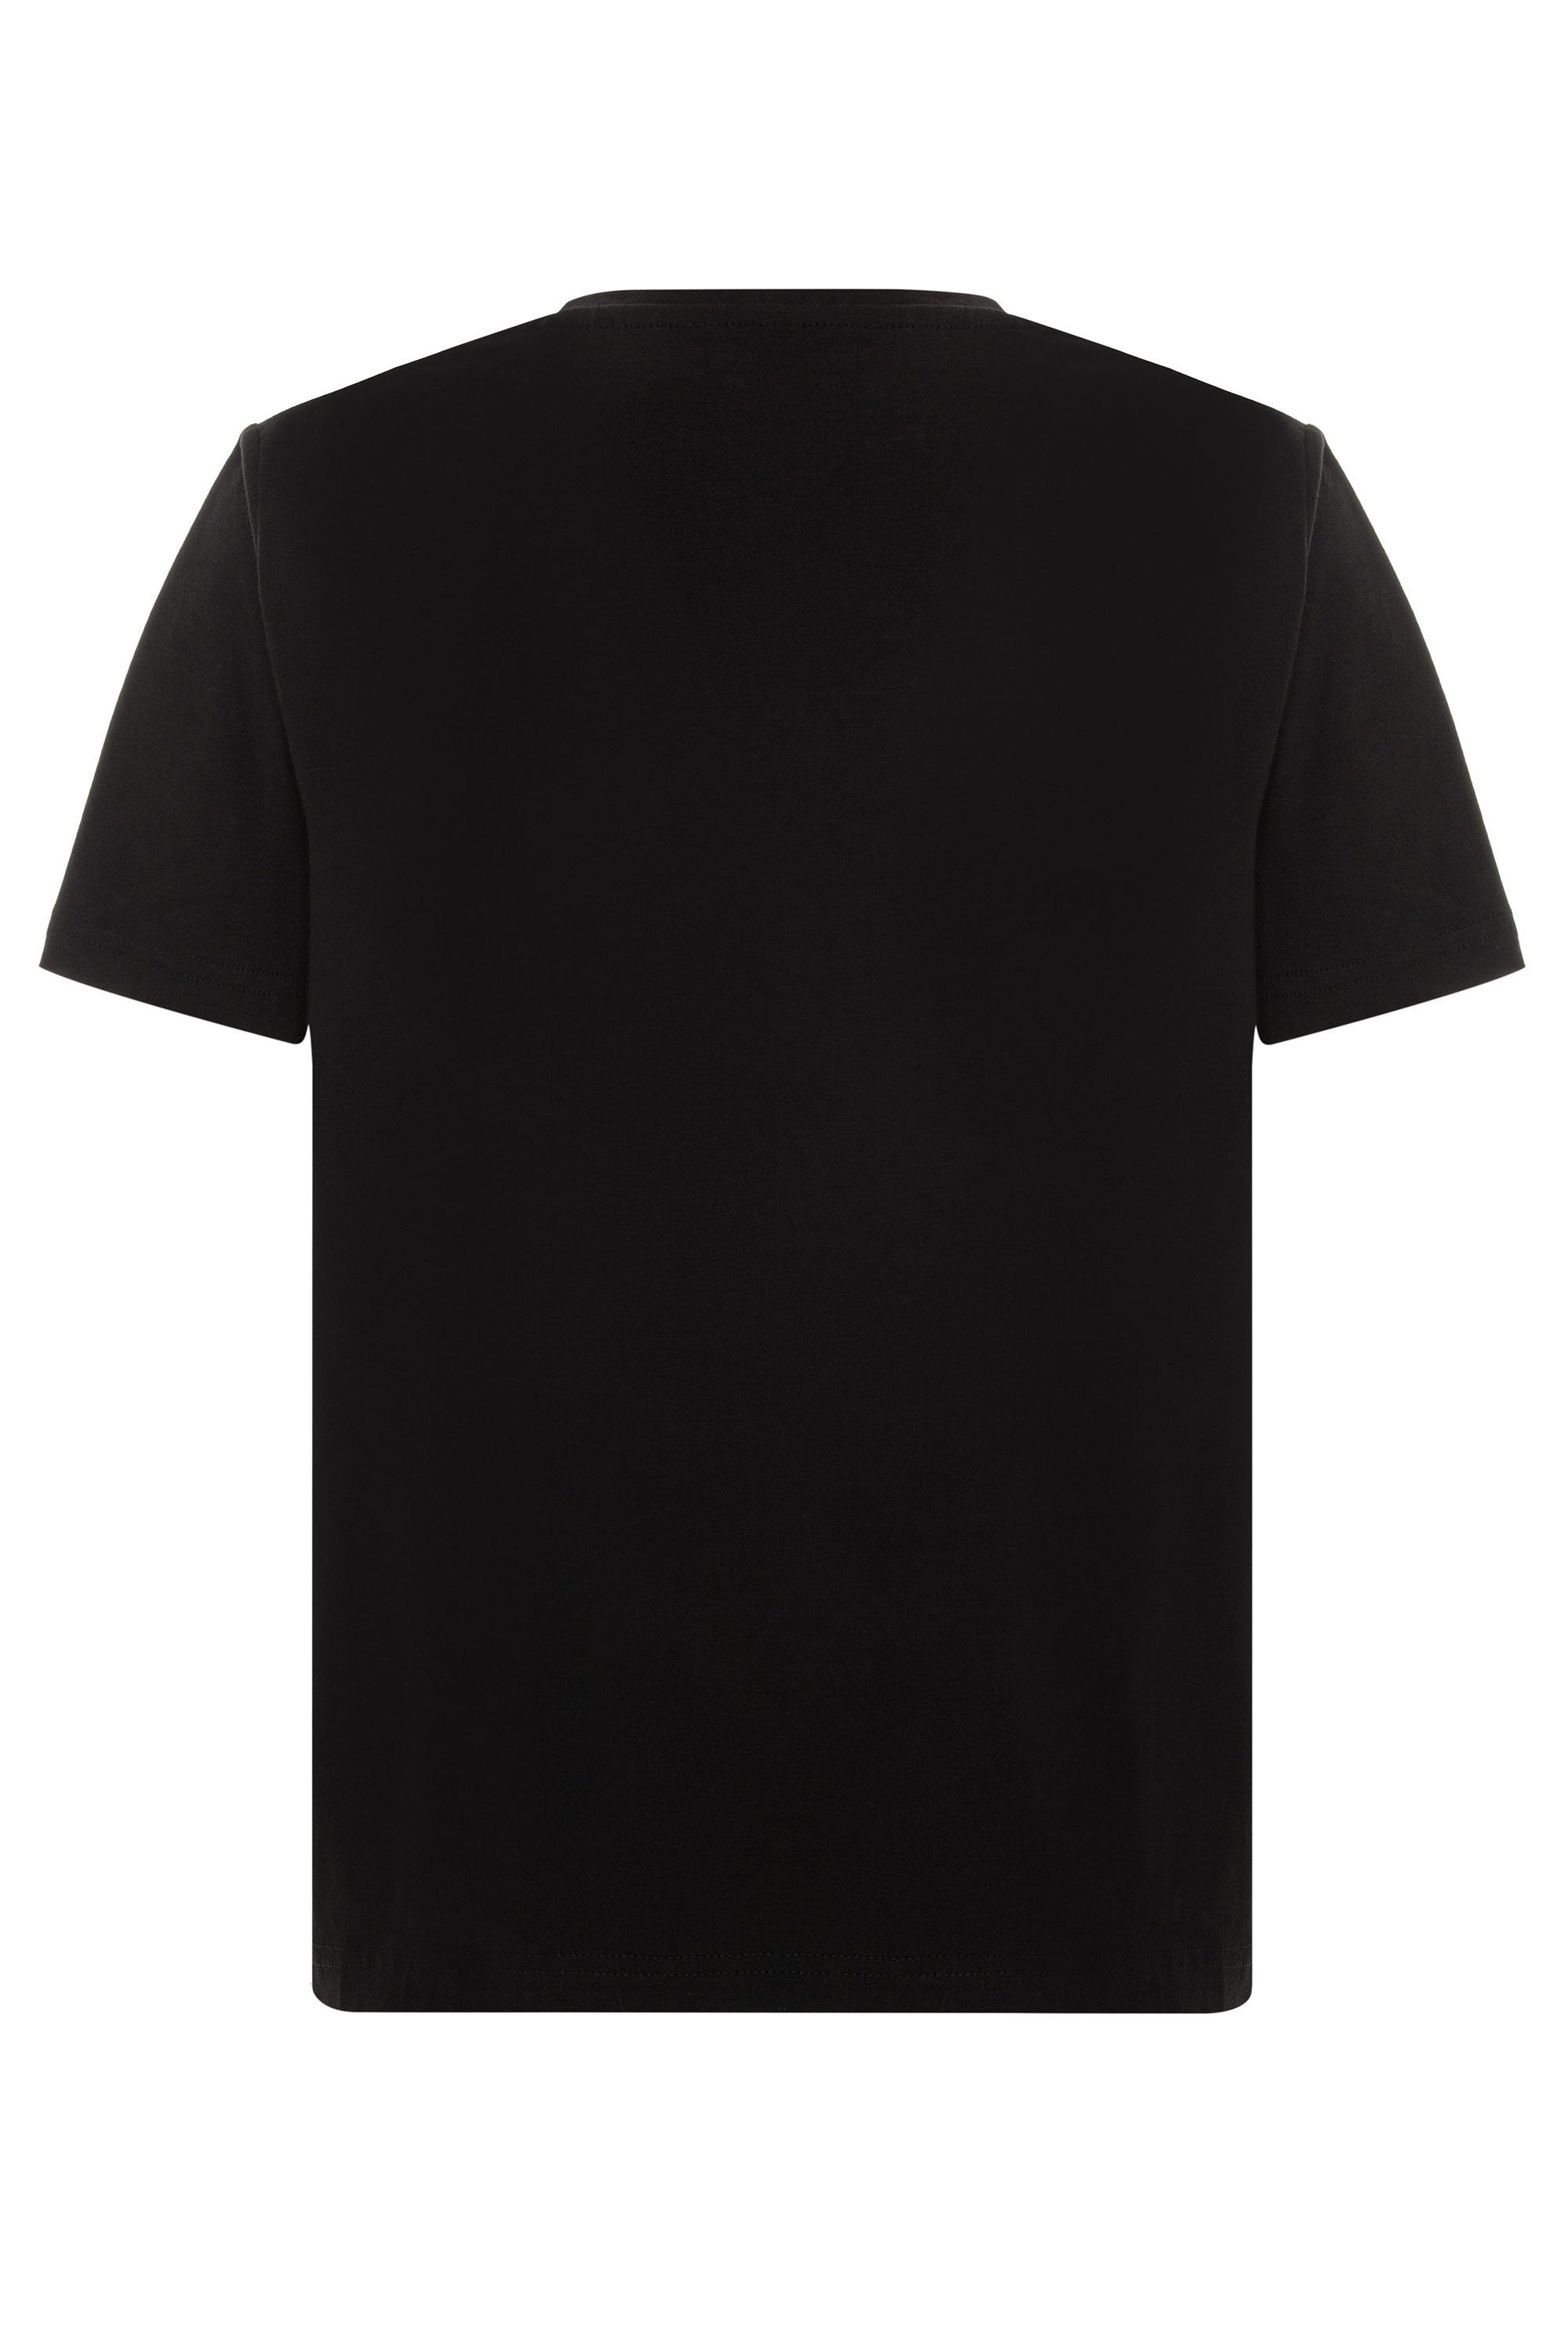 Print Baxx Cipo coolem schwarz-weiß mit T-Shirt &